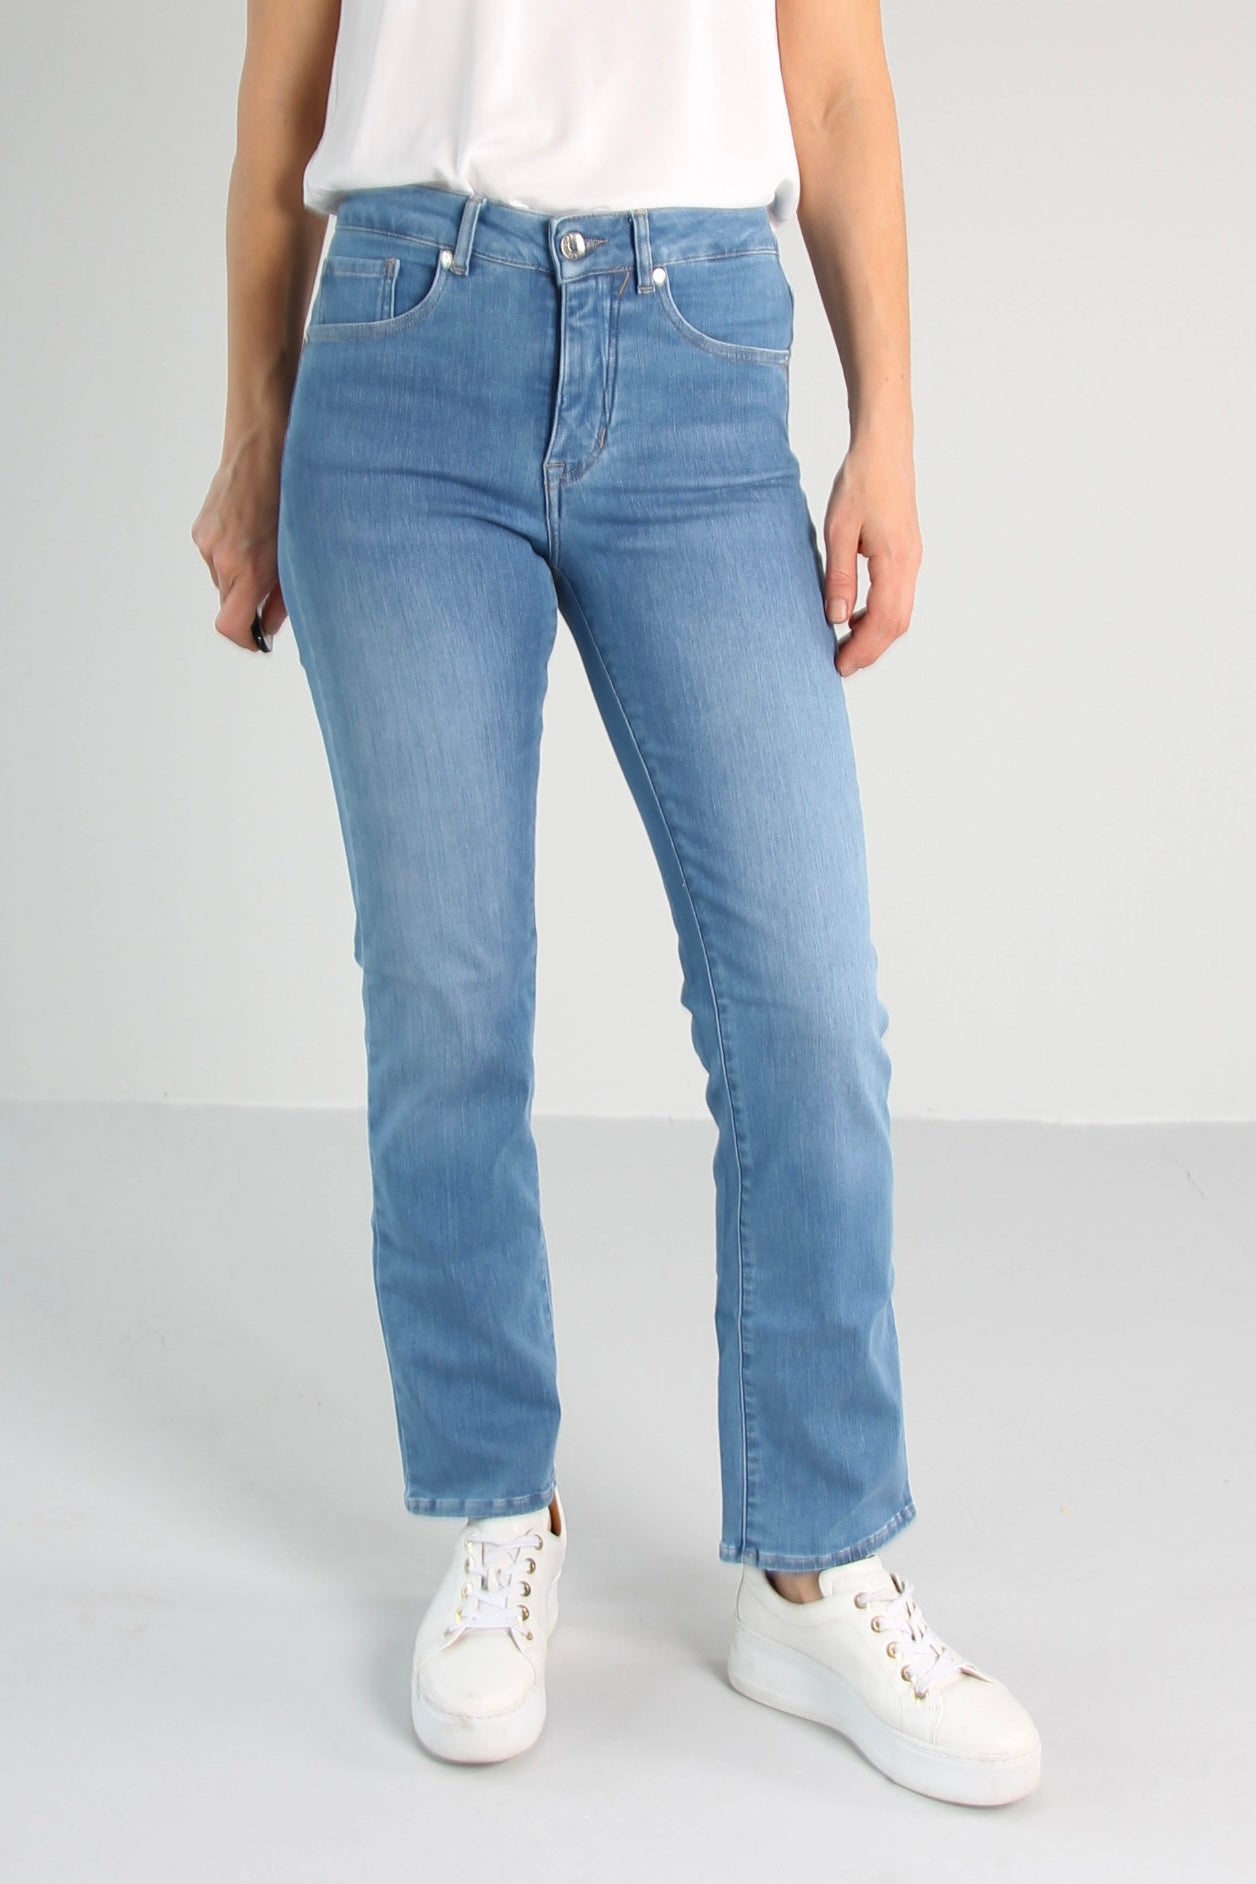 Få igjen - Vally Sea blue Jeans - Dame - Straight  - High waist - Stretchy